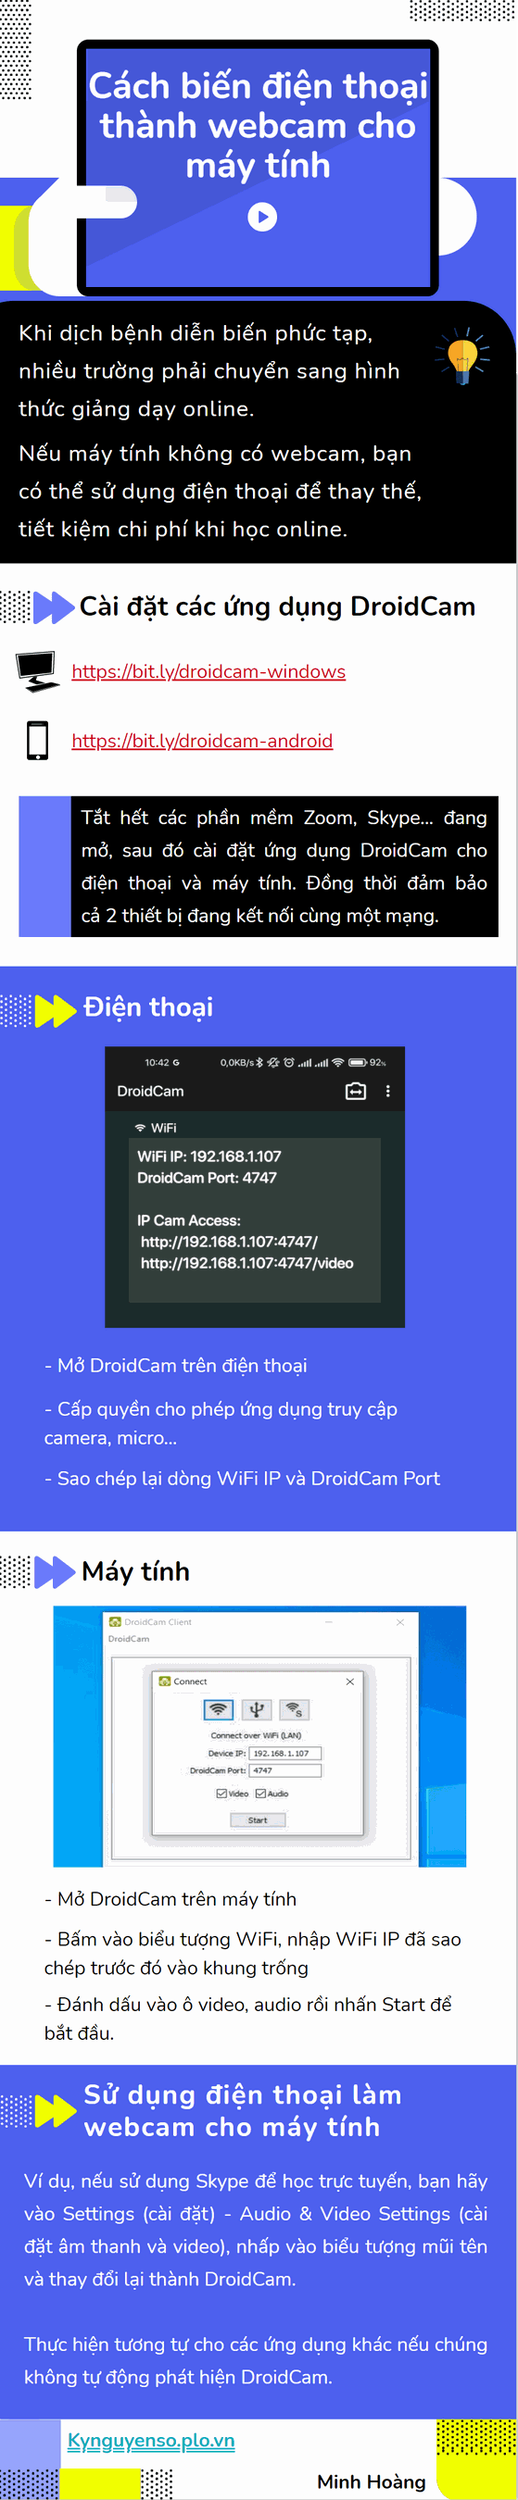 bien-dien-thoai-thanh-webcam-may-tinh_lsfd.png